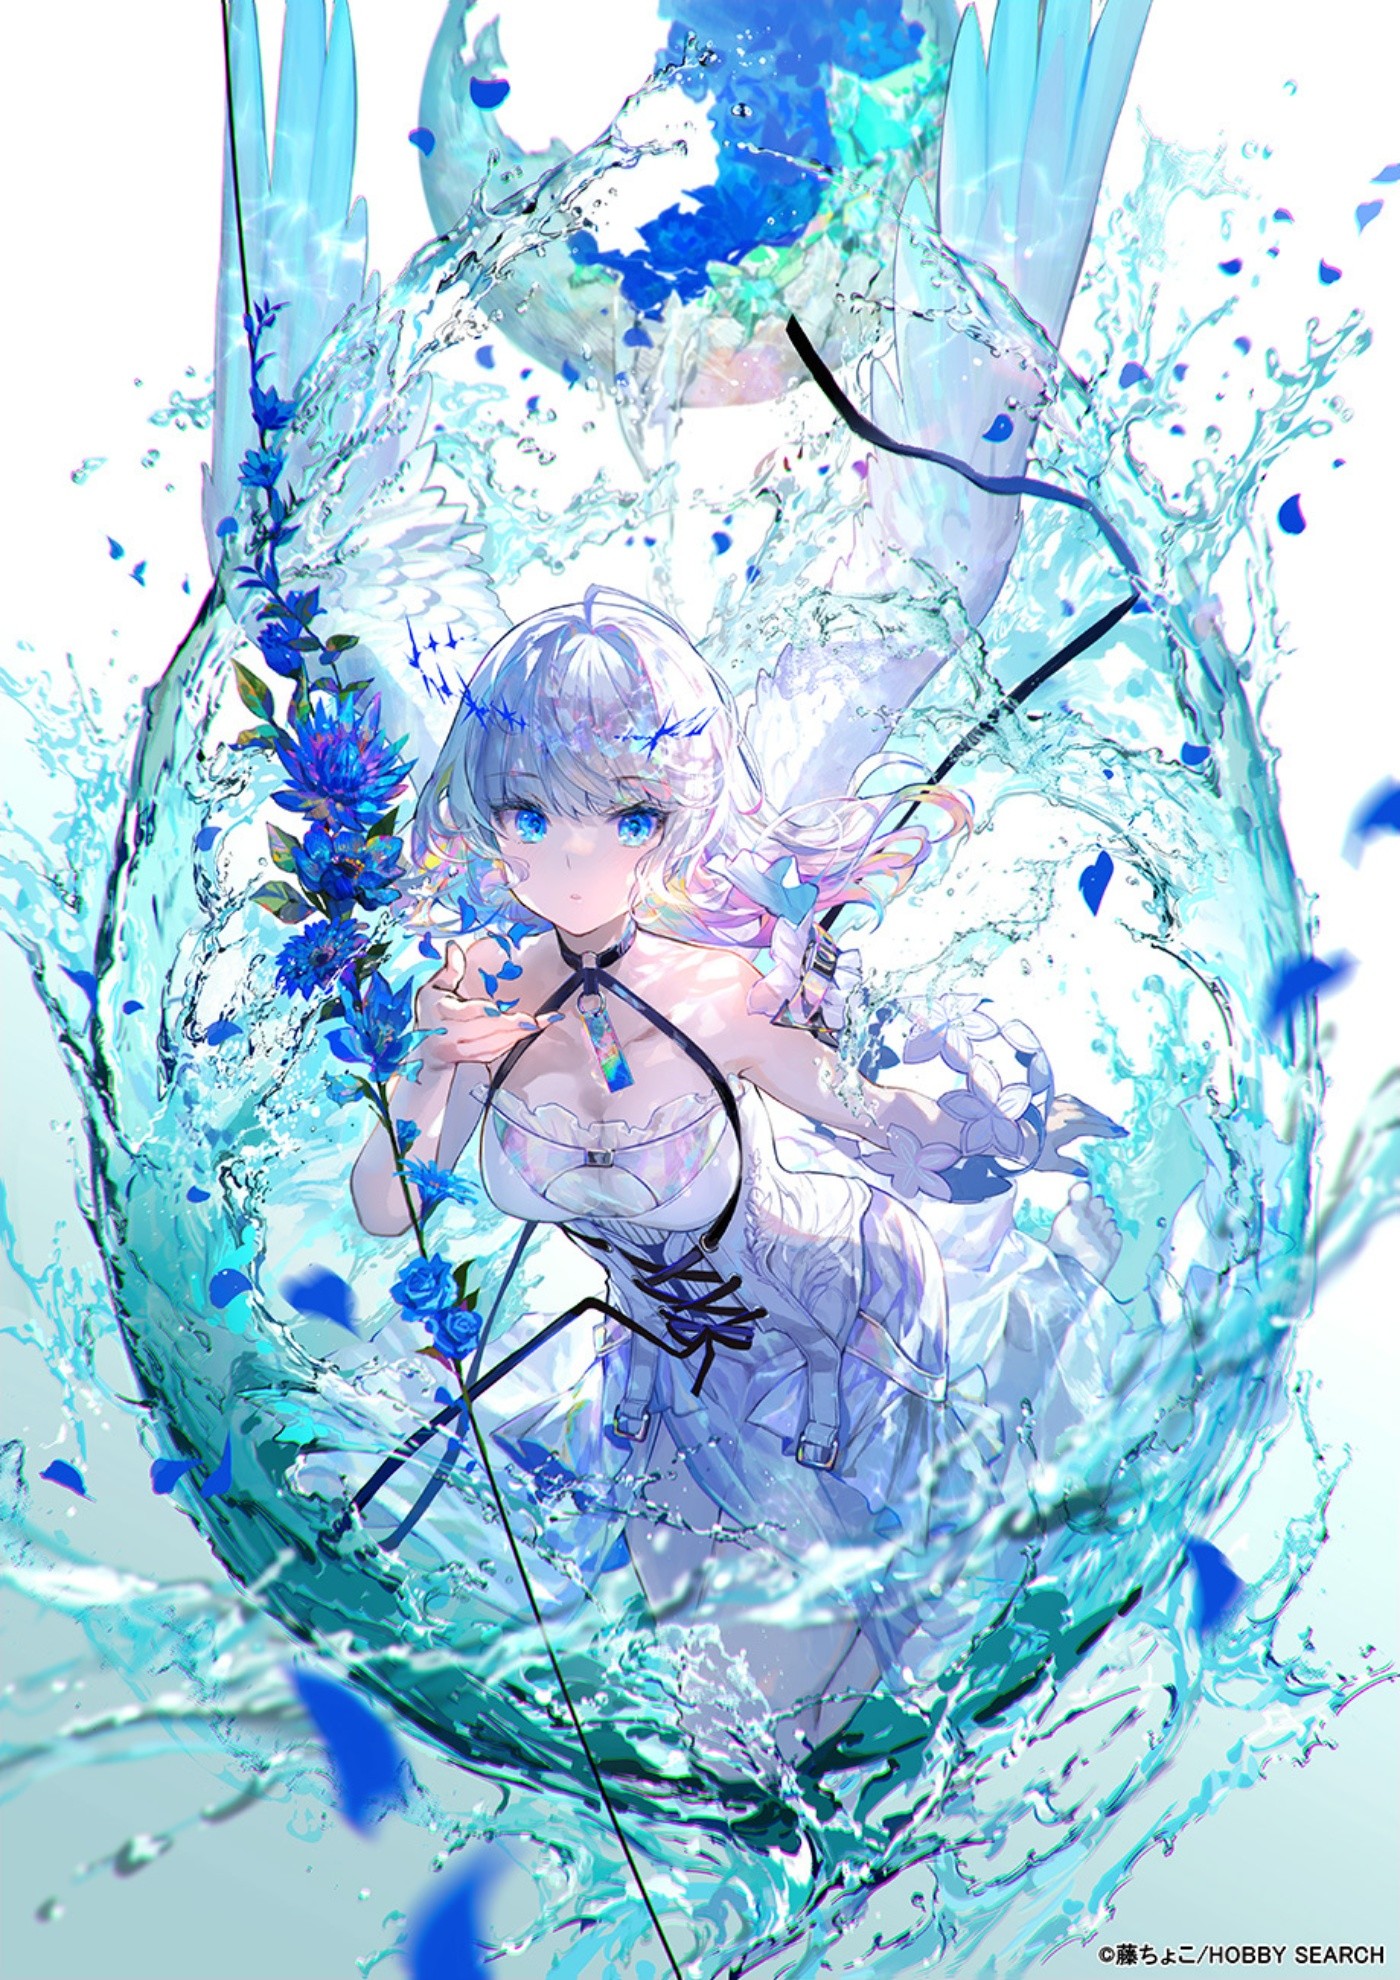 Anime 1400x1980 anime anime girls Fuji Choko portrait display water in water looking at viewer blue eyes multi-colored hair flowers petals